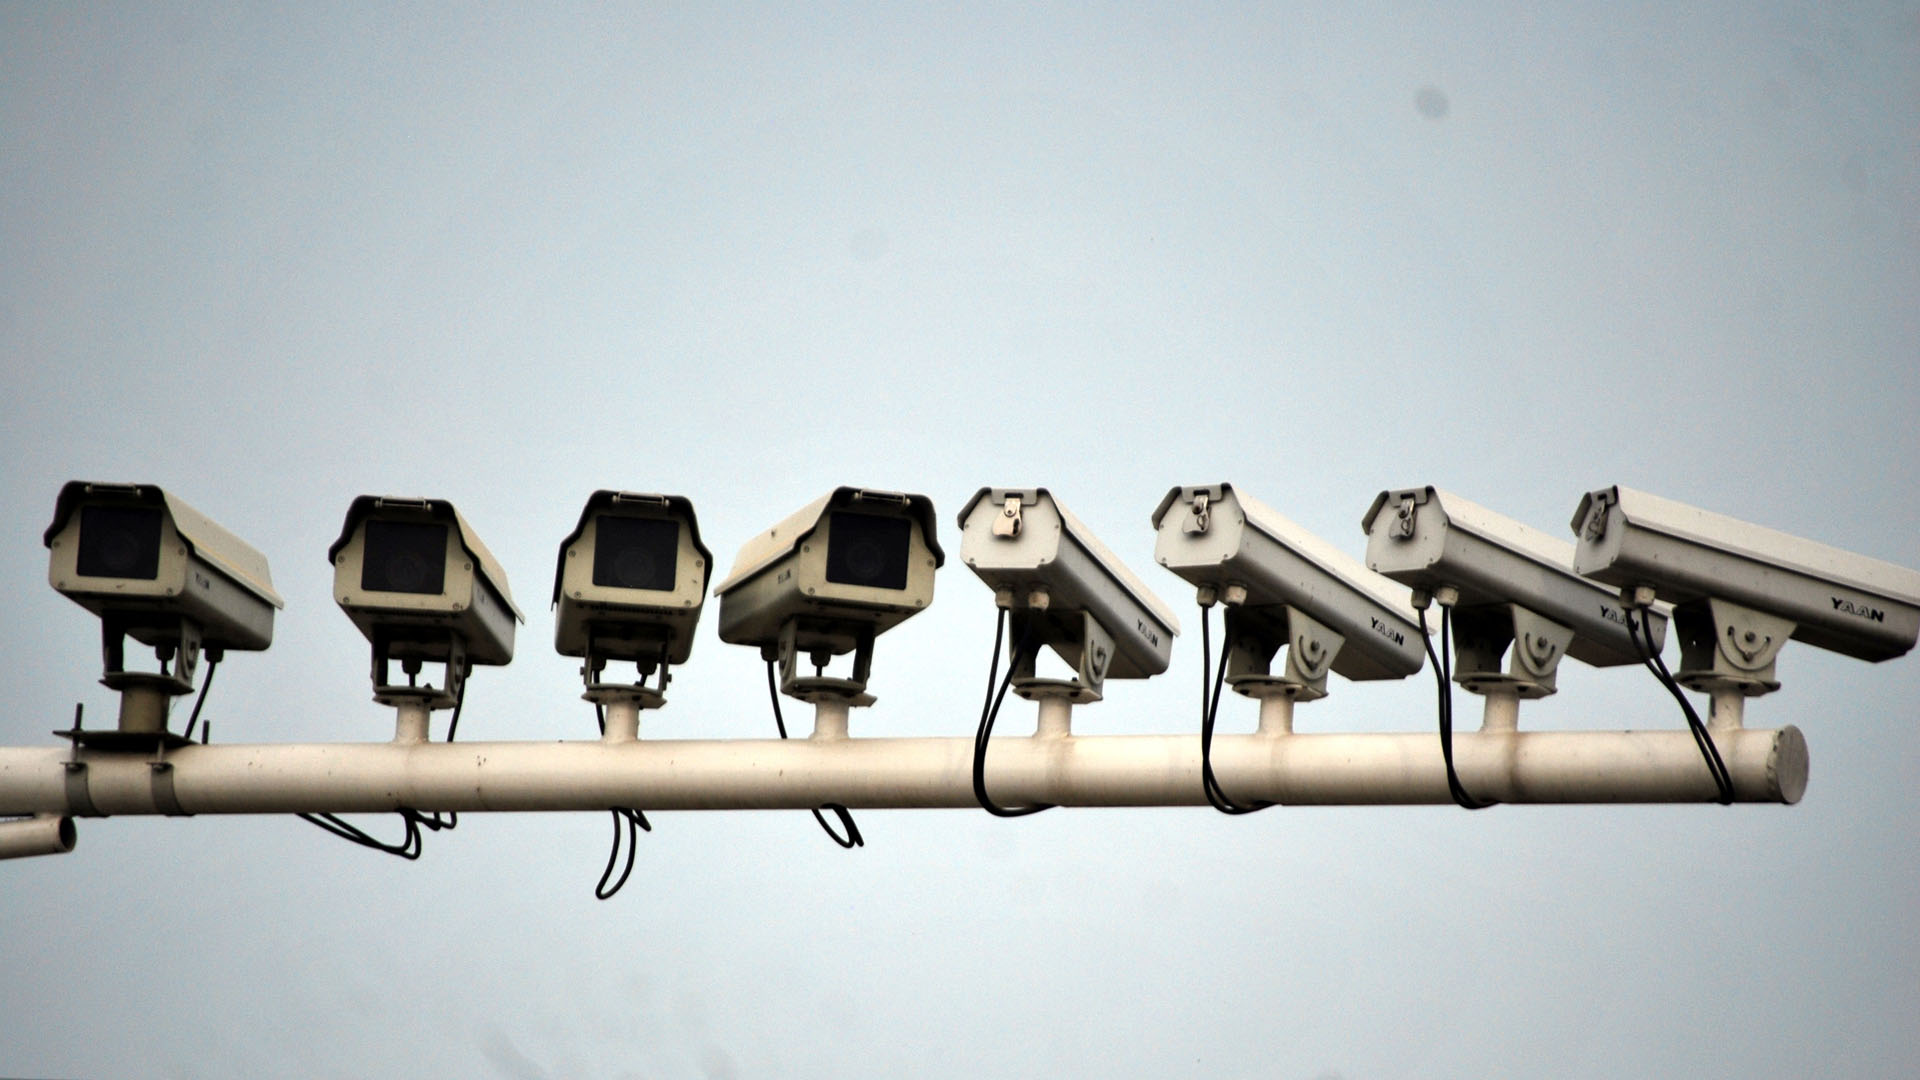 Horizontal array of traffic monitoring cameras.